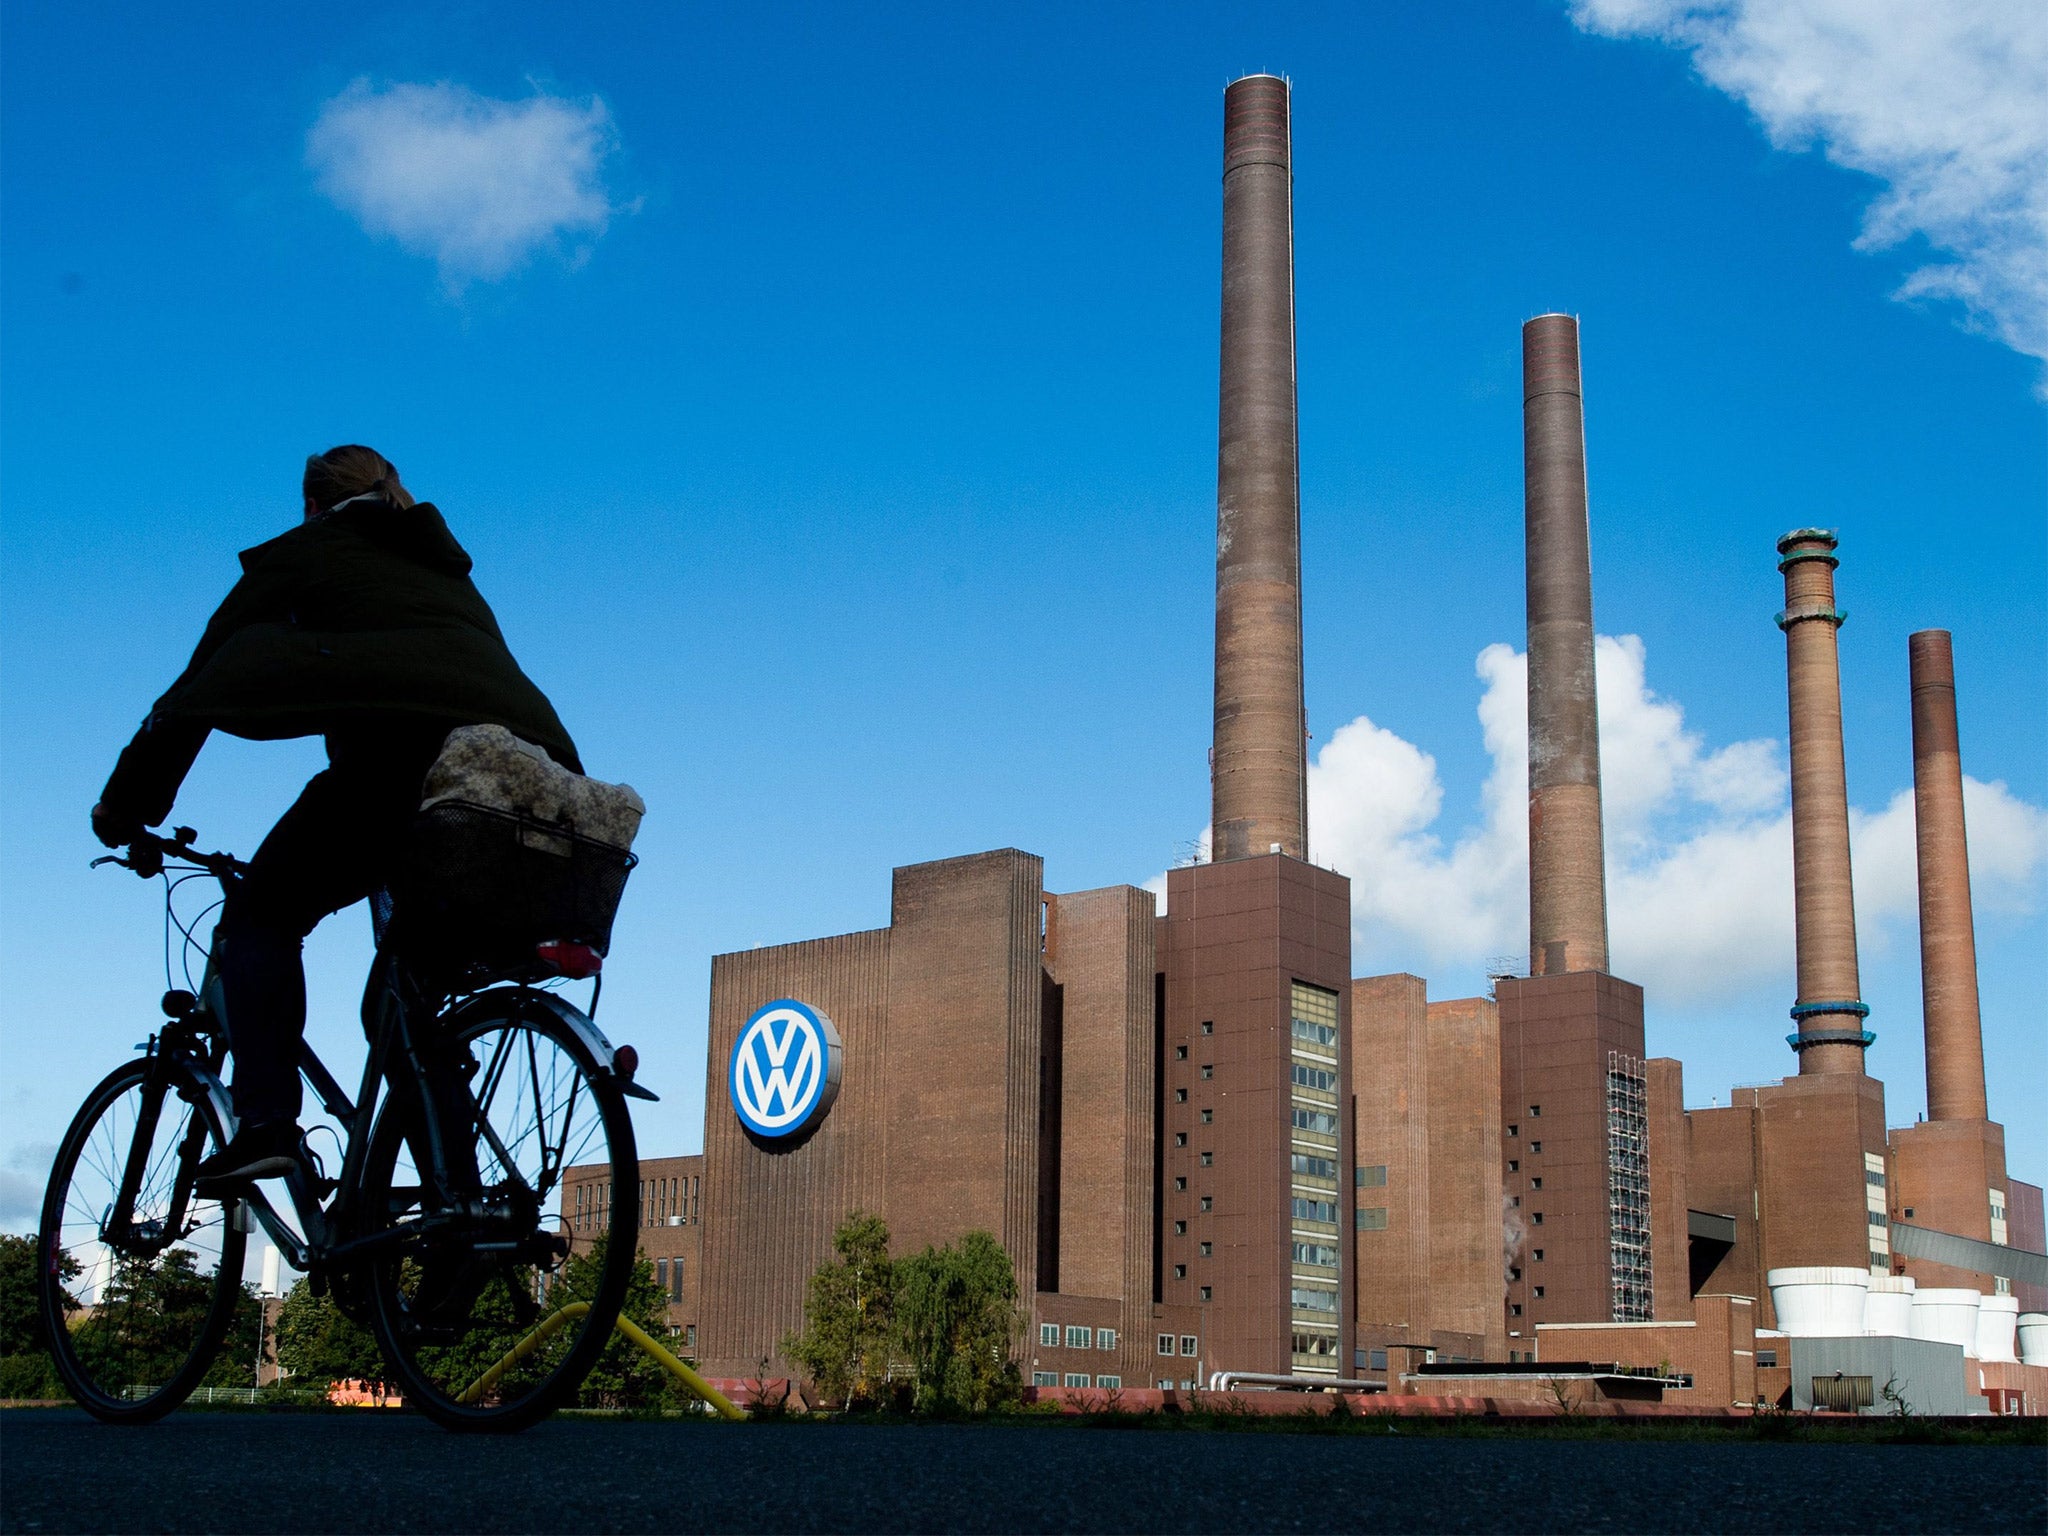 The Volkswagen plant in Wolfsburg, Germany